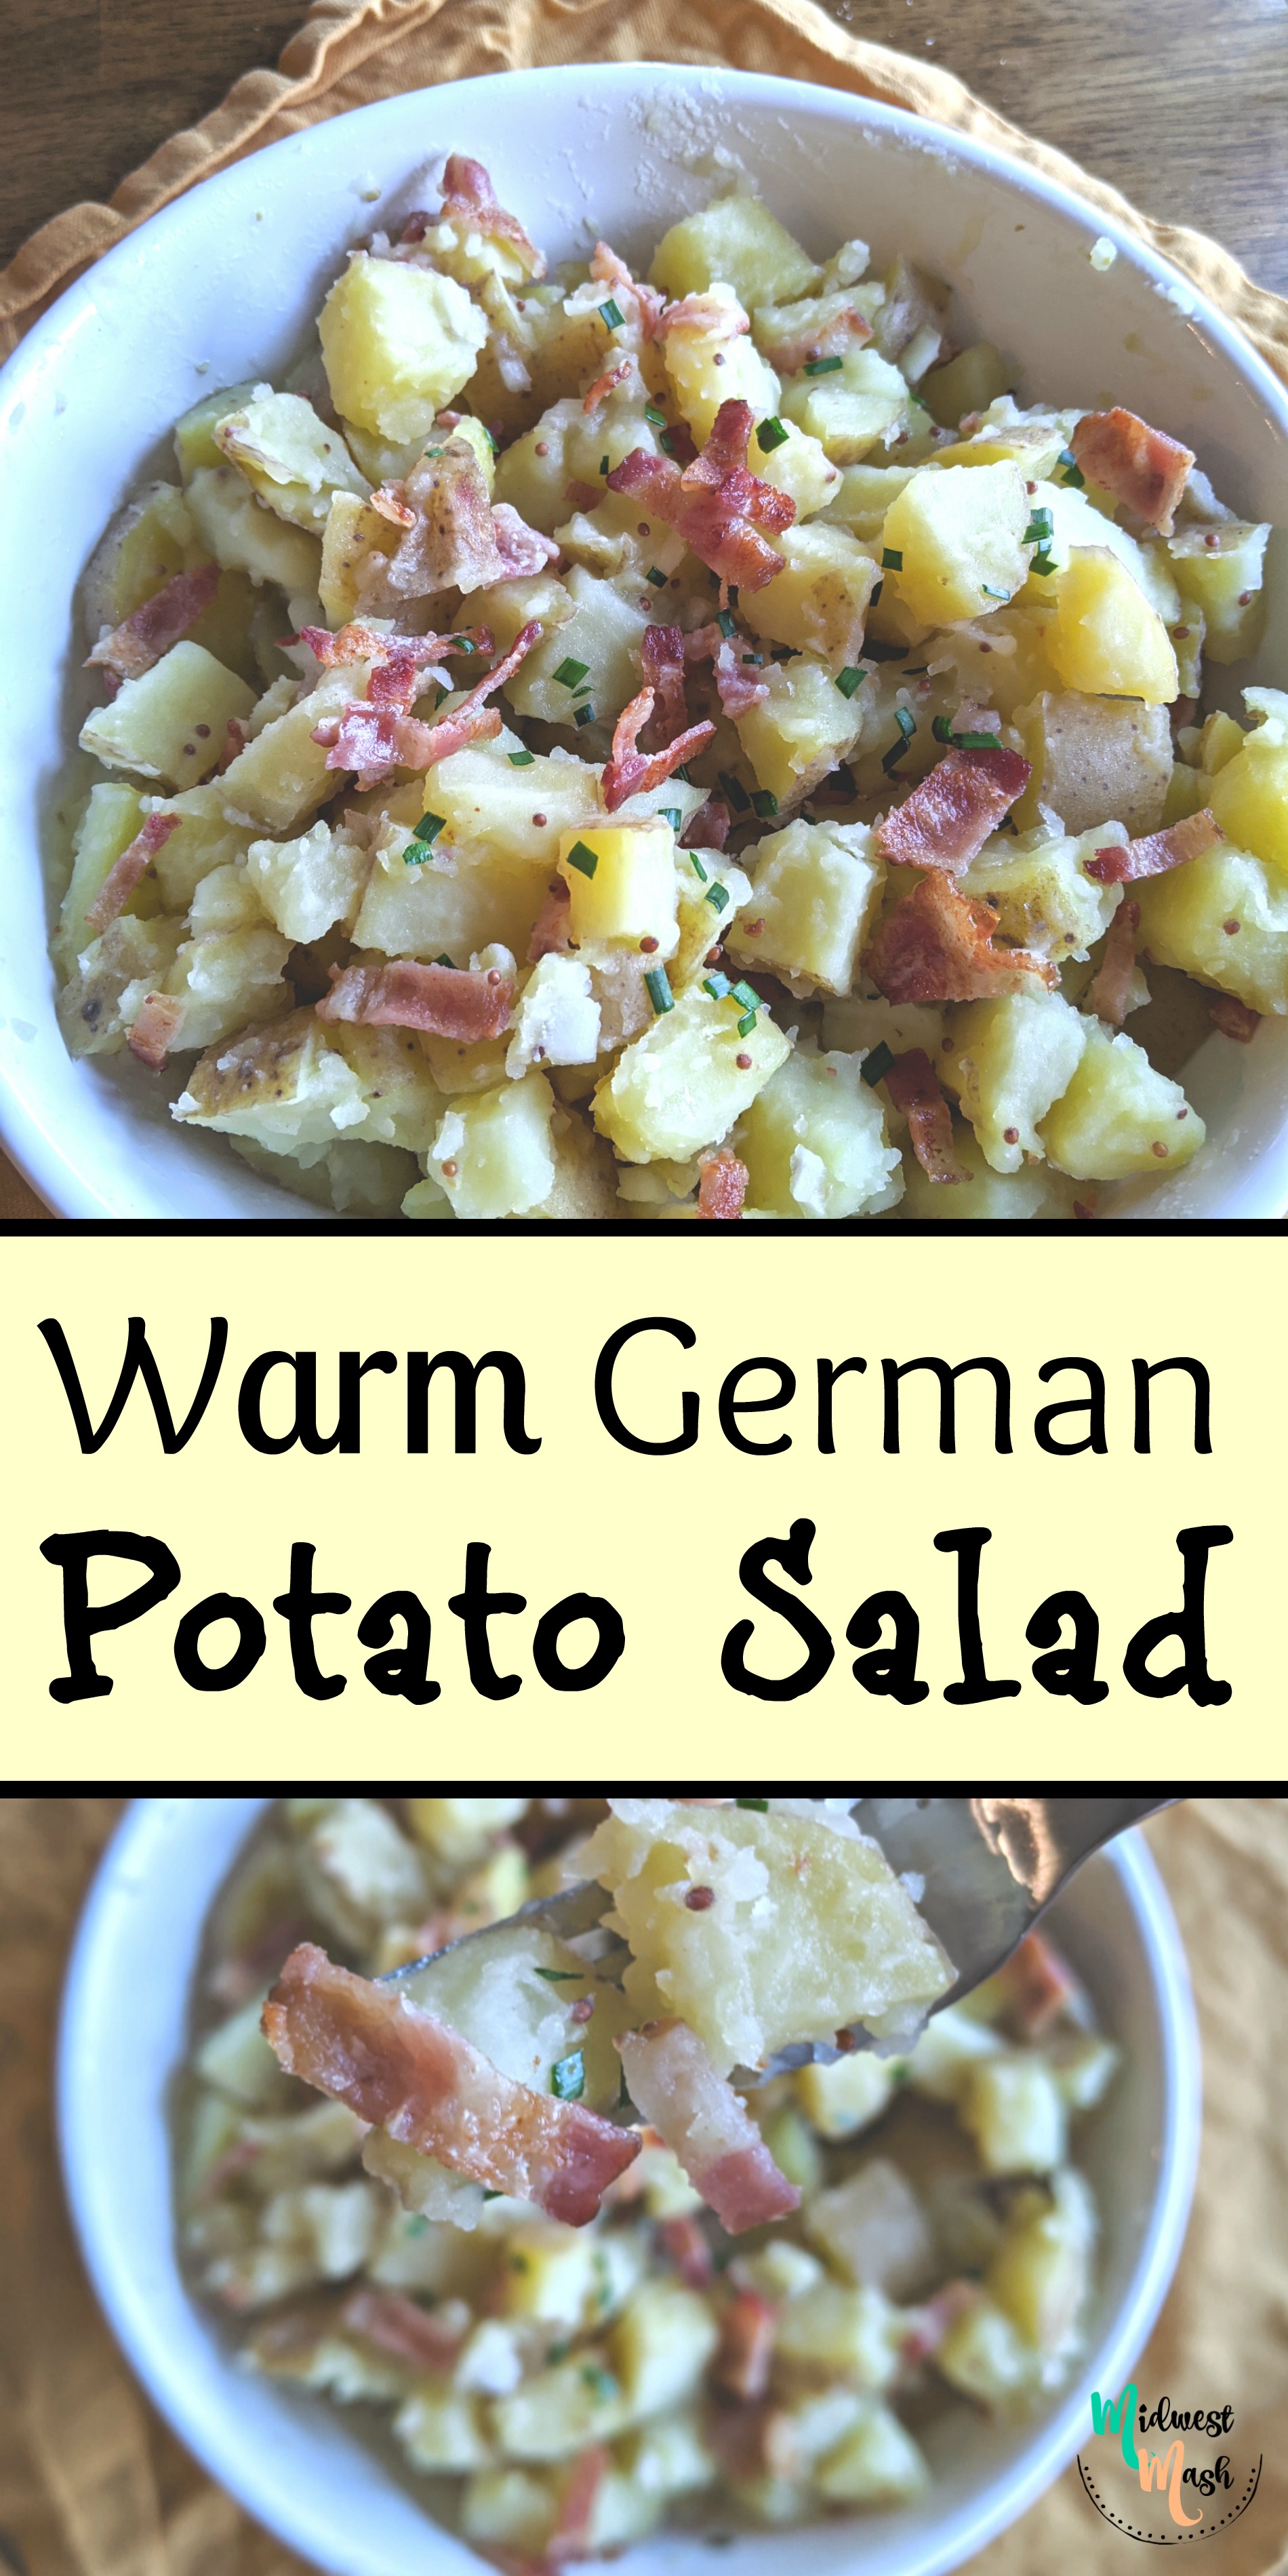 Warm German Potato Salad | Midwest Mash